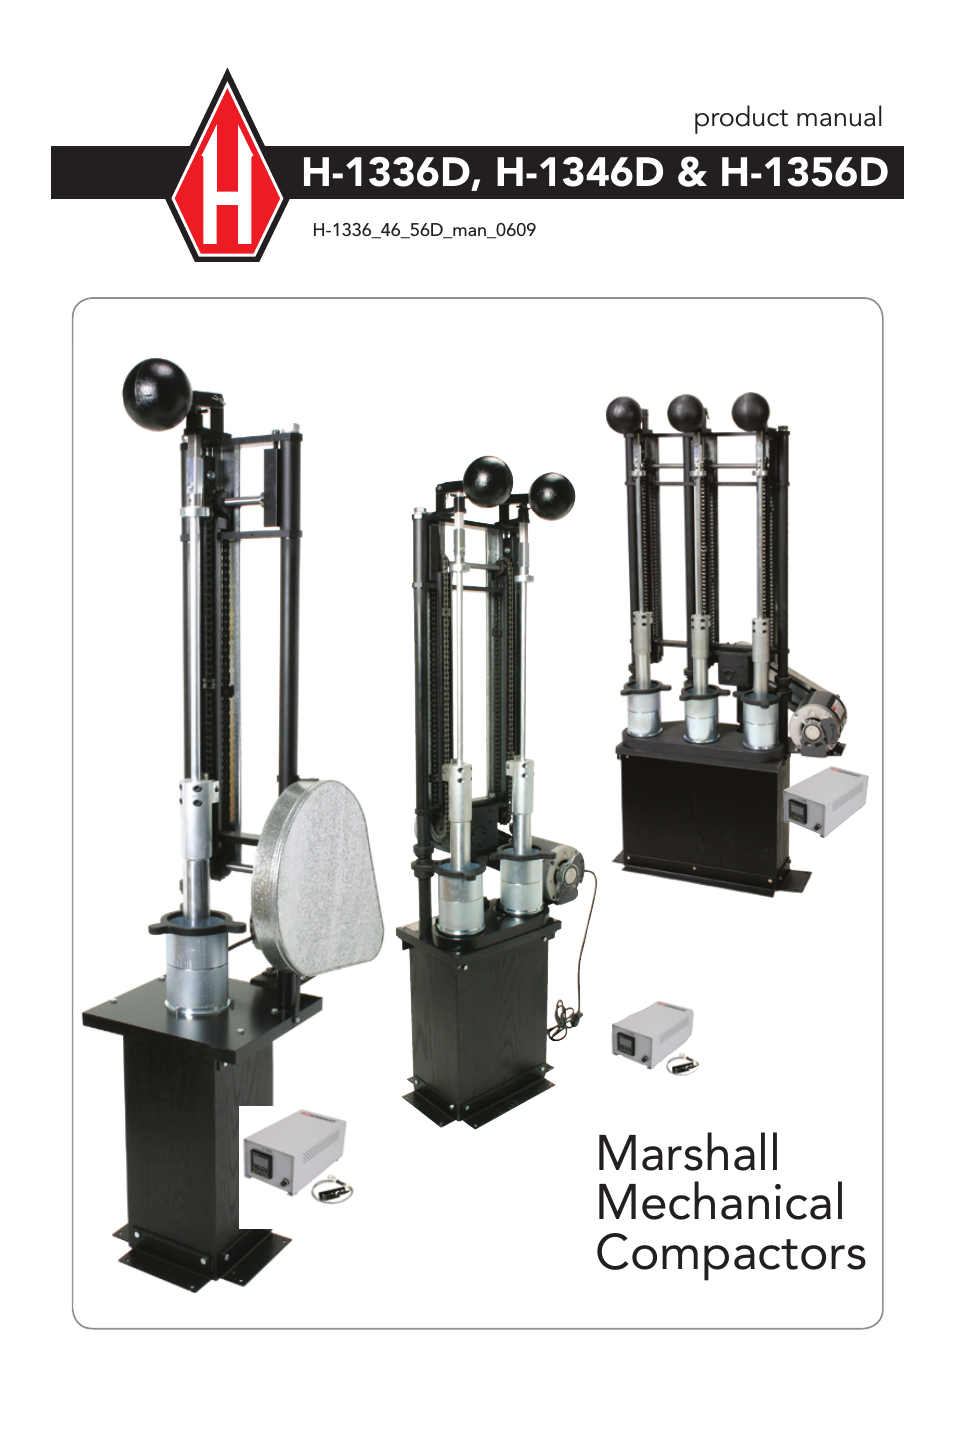 H-1346D Marshall Mechanical Compactors